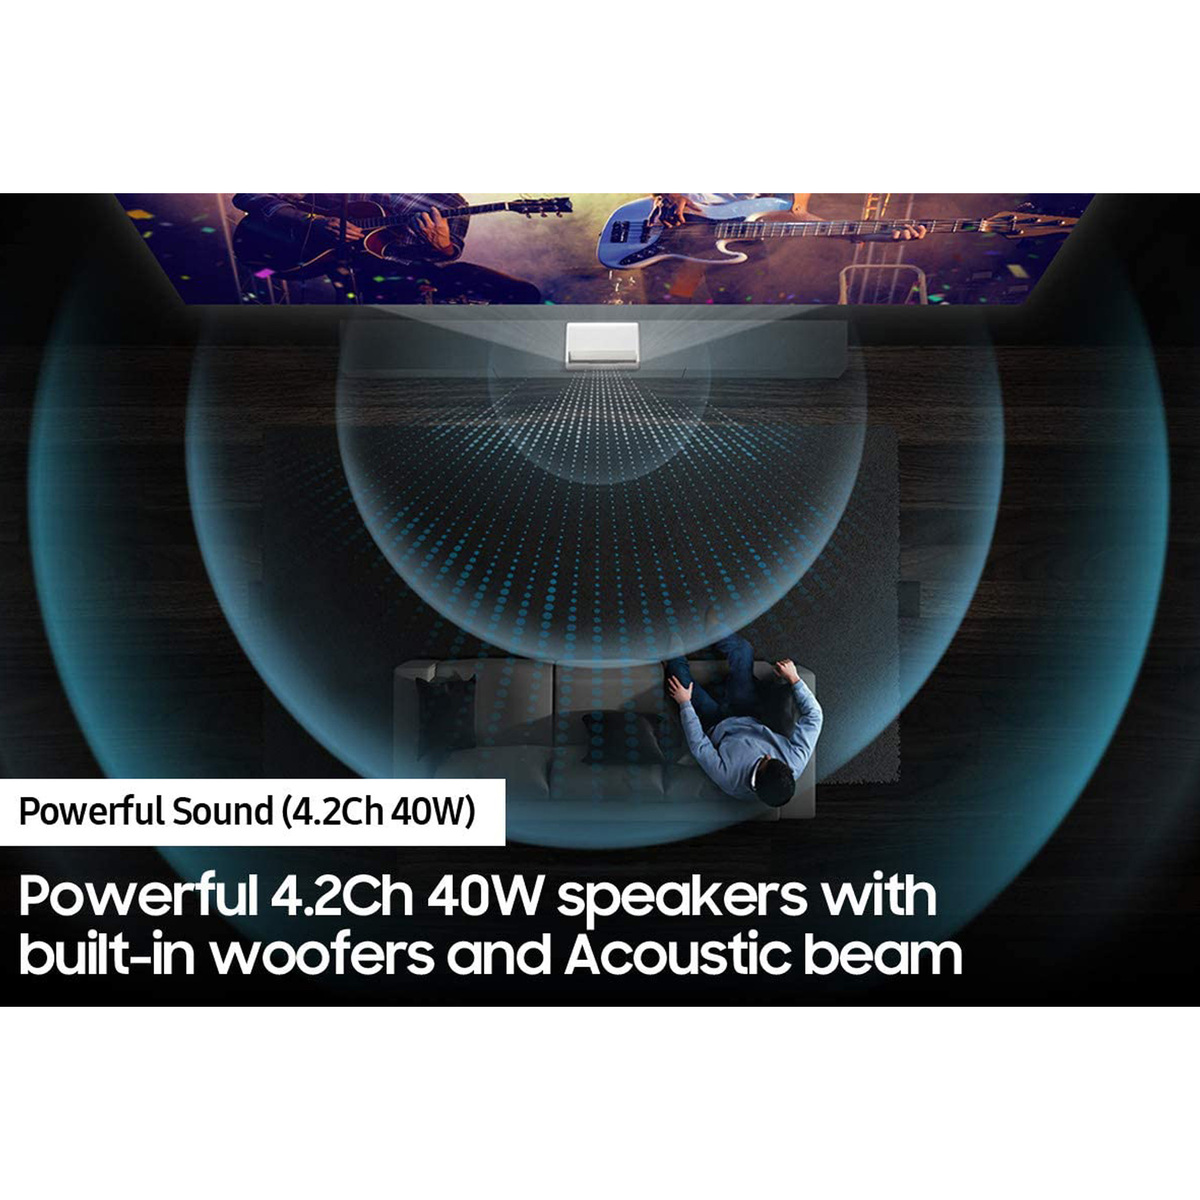 Samsung The Premiere Smart 4K UHD Ultra-short throw Triple laser projector SP-LSP9TUAXZN